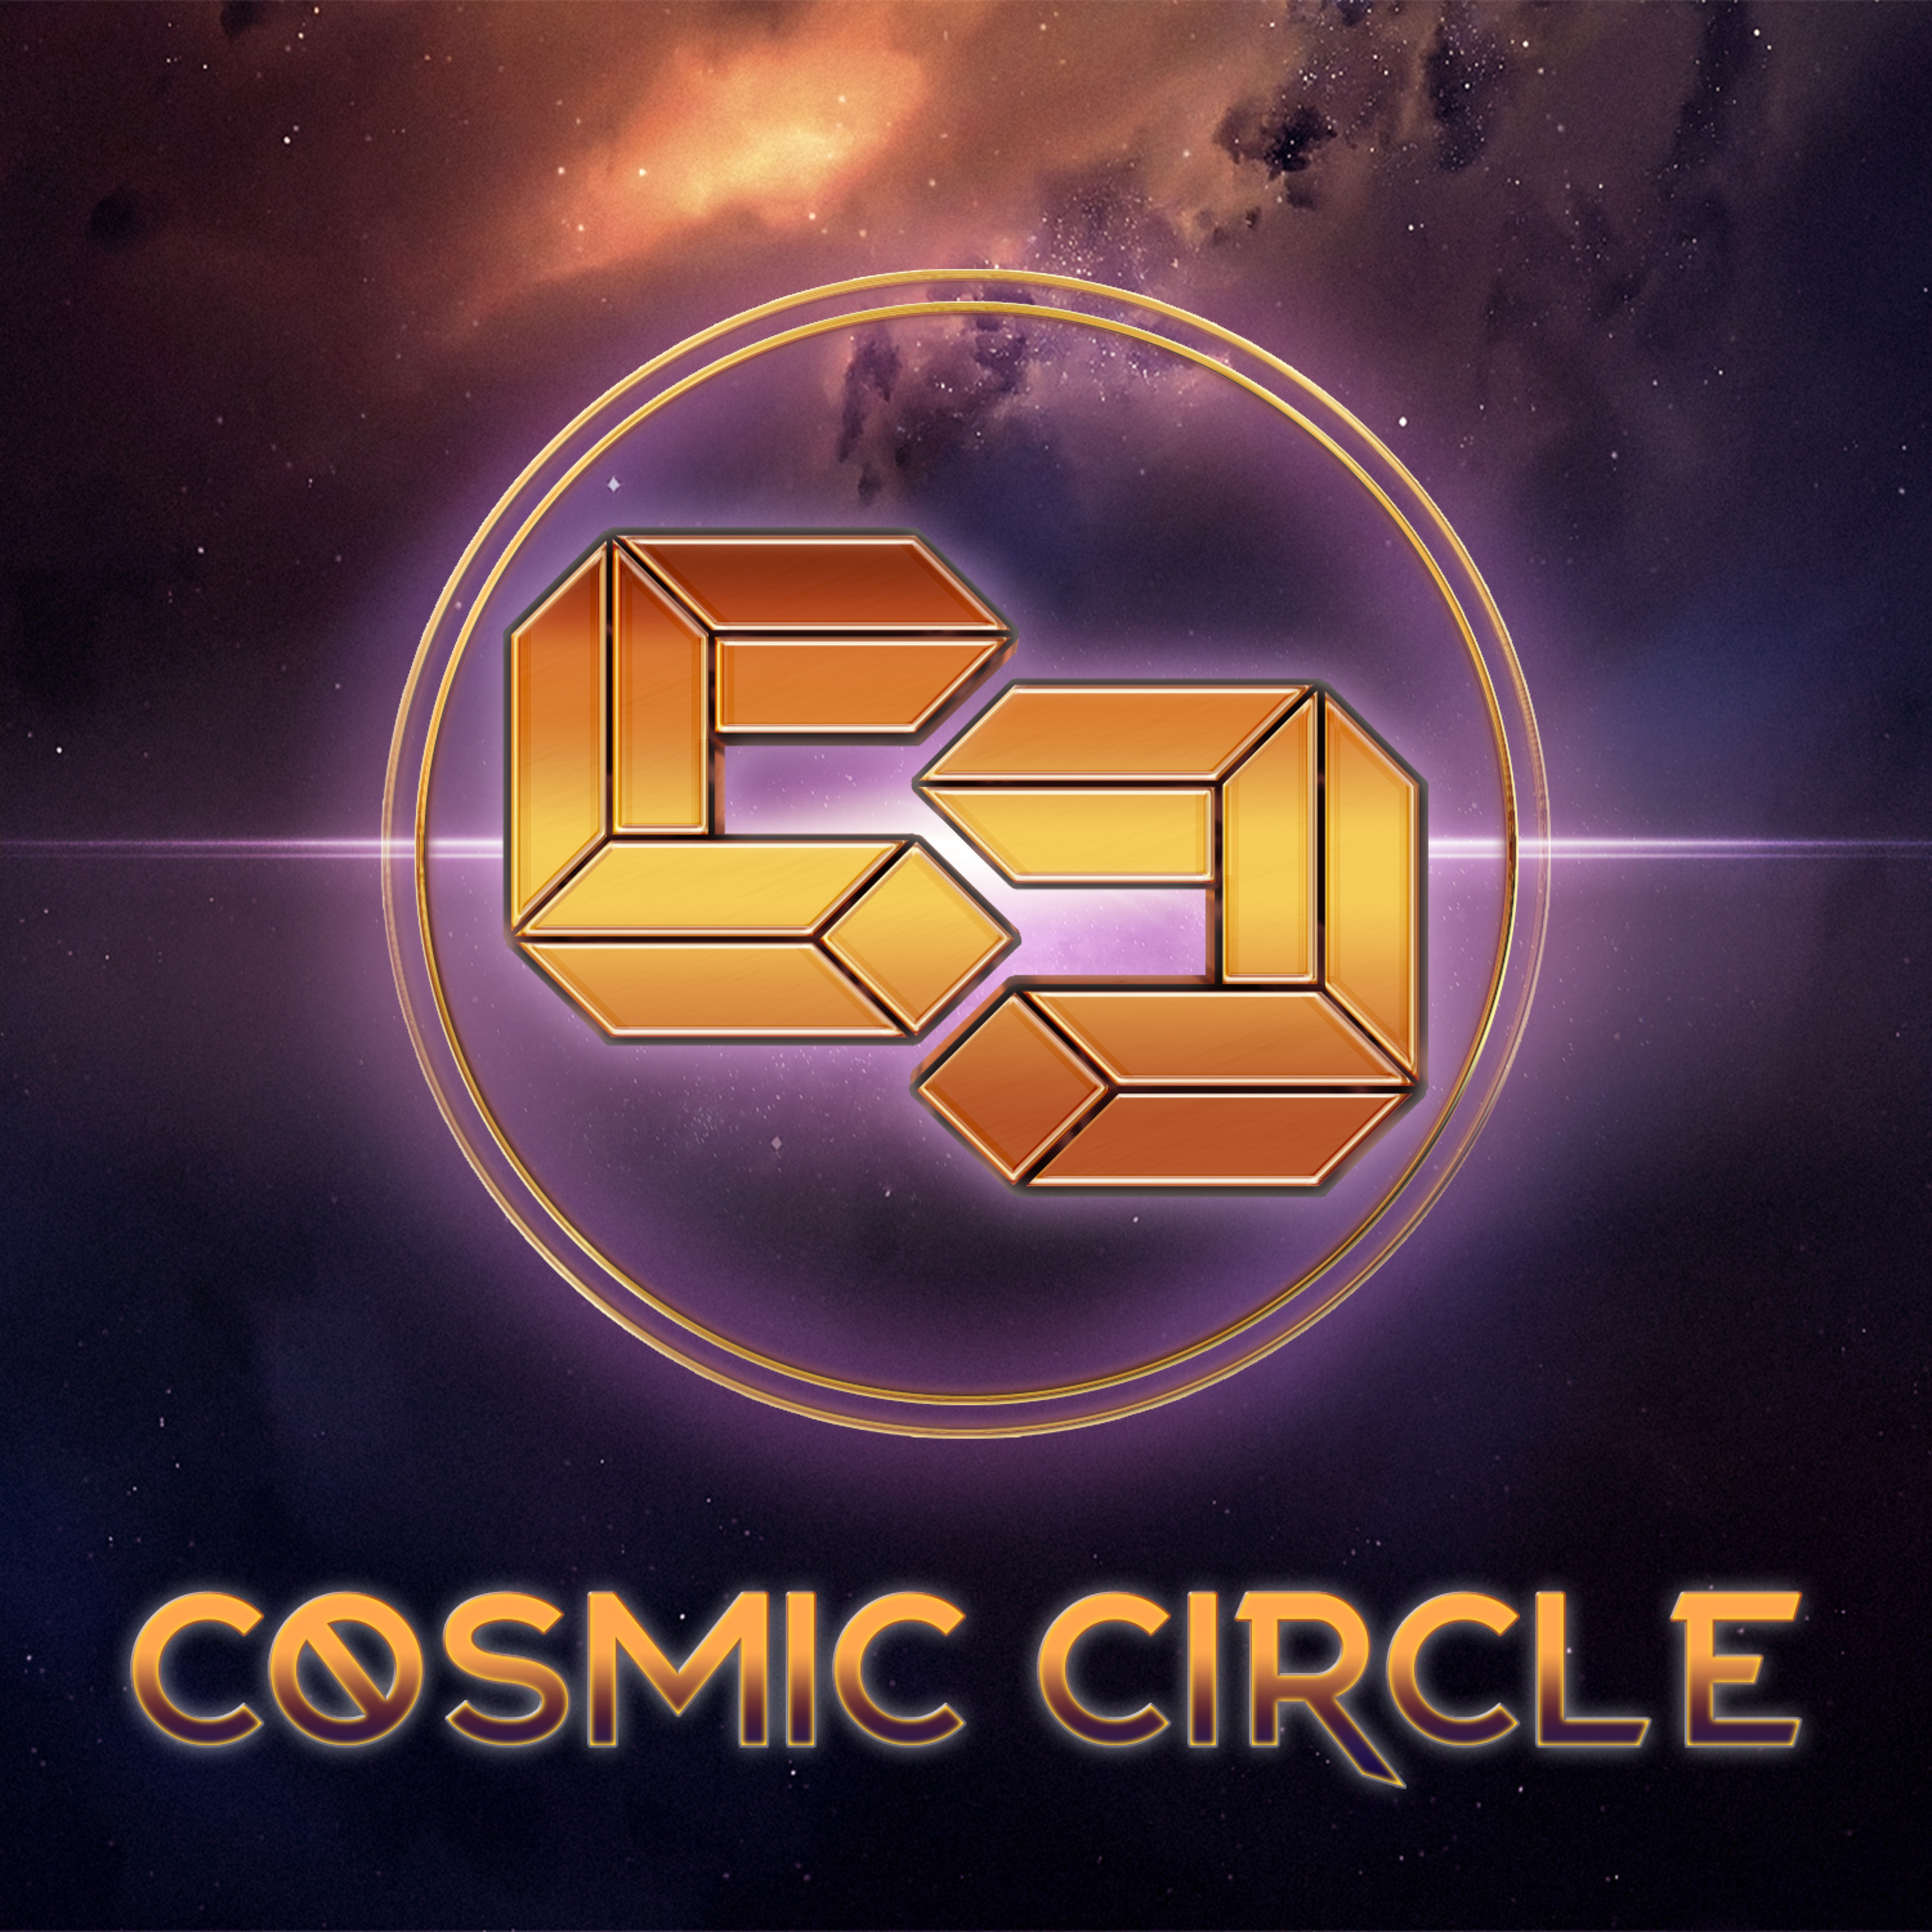 Cosmic Circle Ep. 22: The Mandalorian Season 3 Discussion